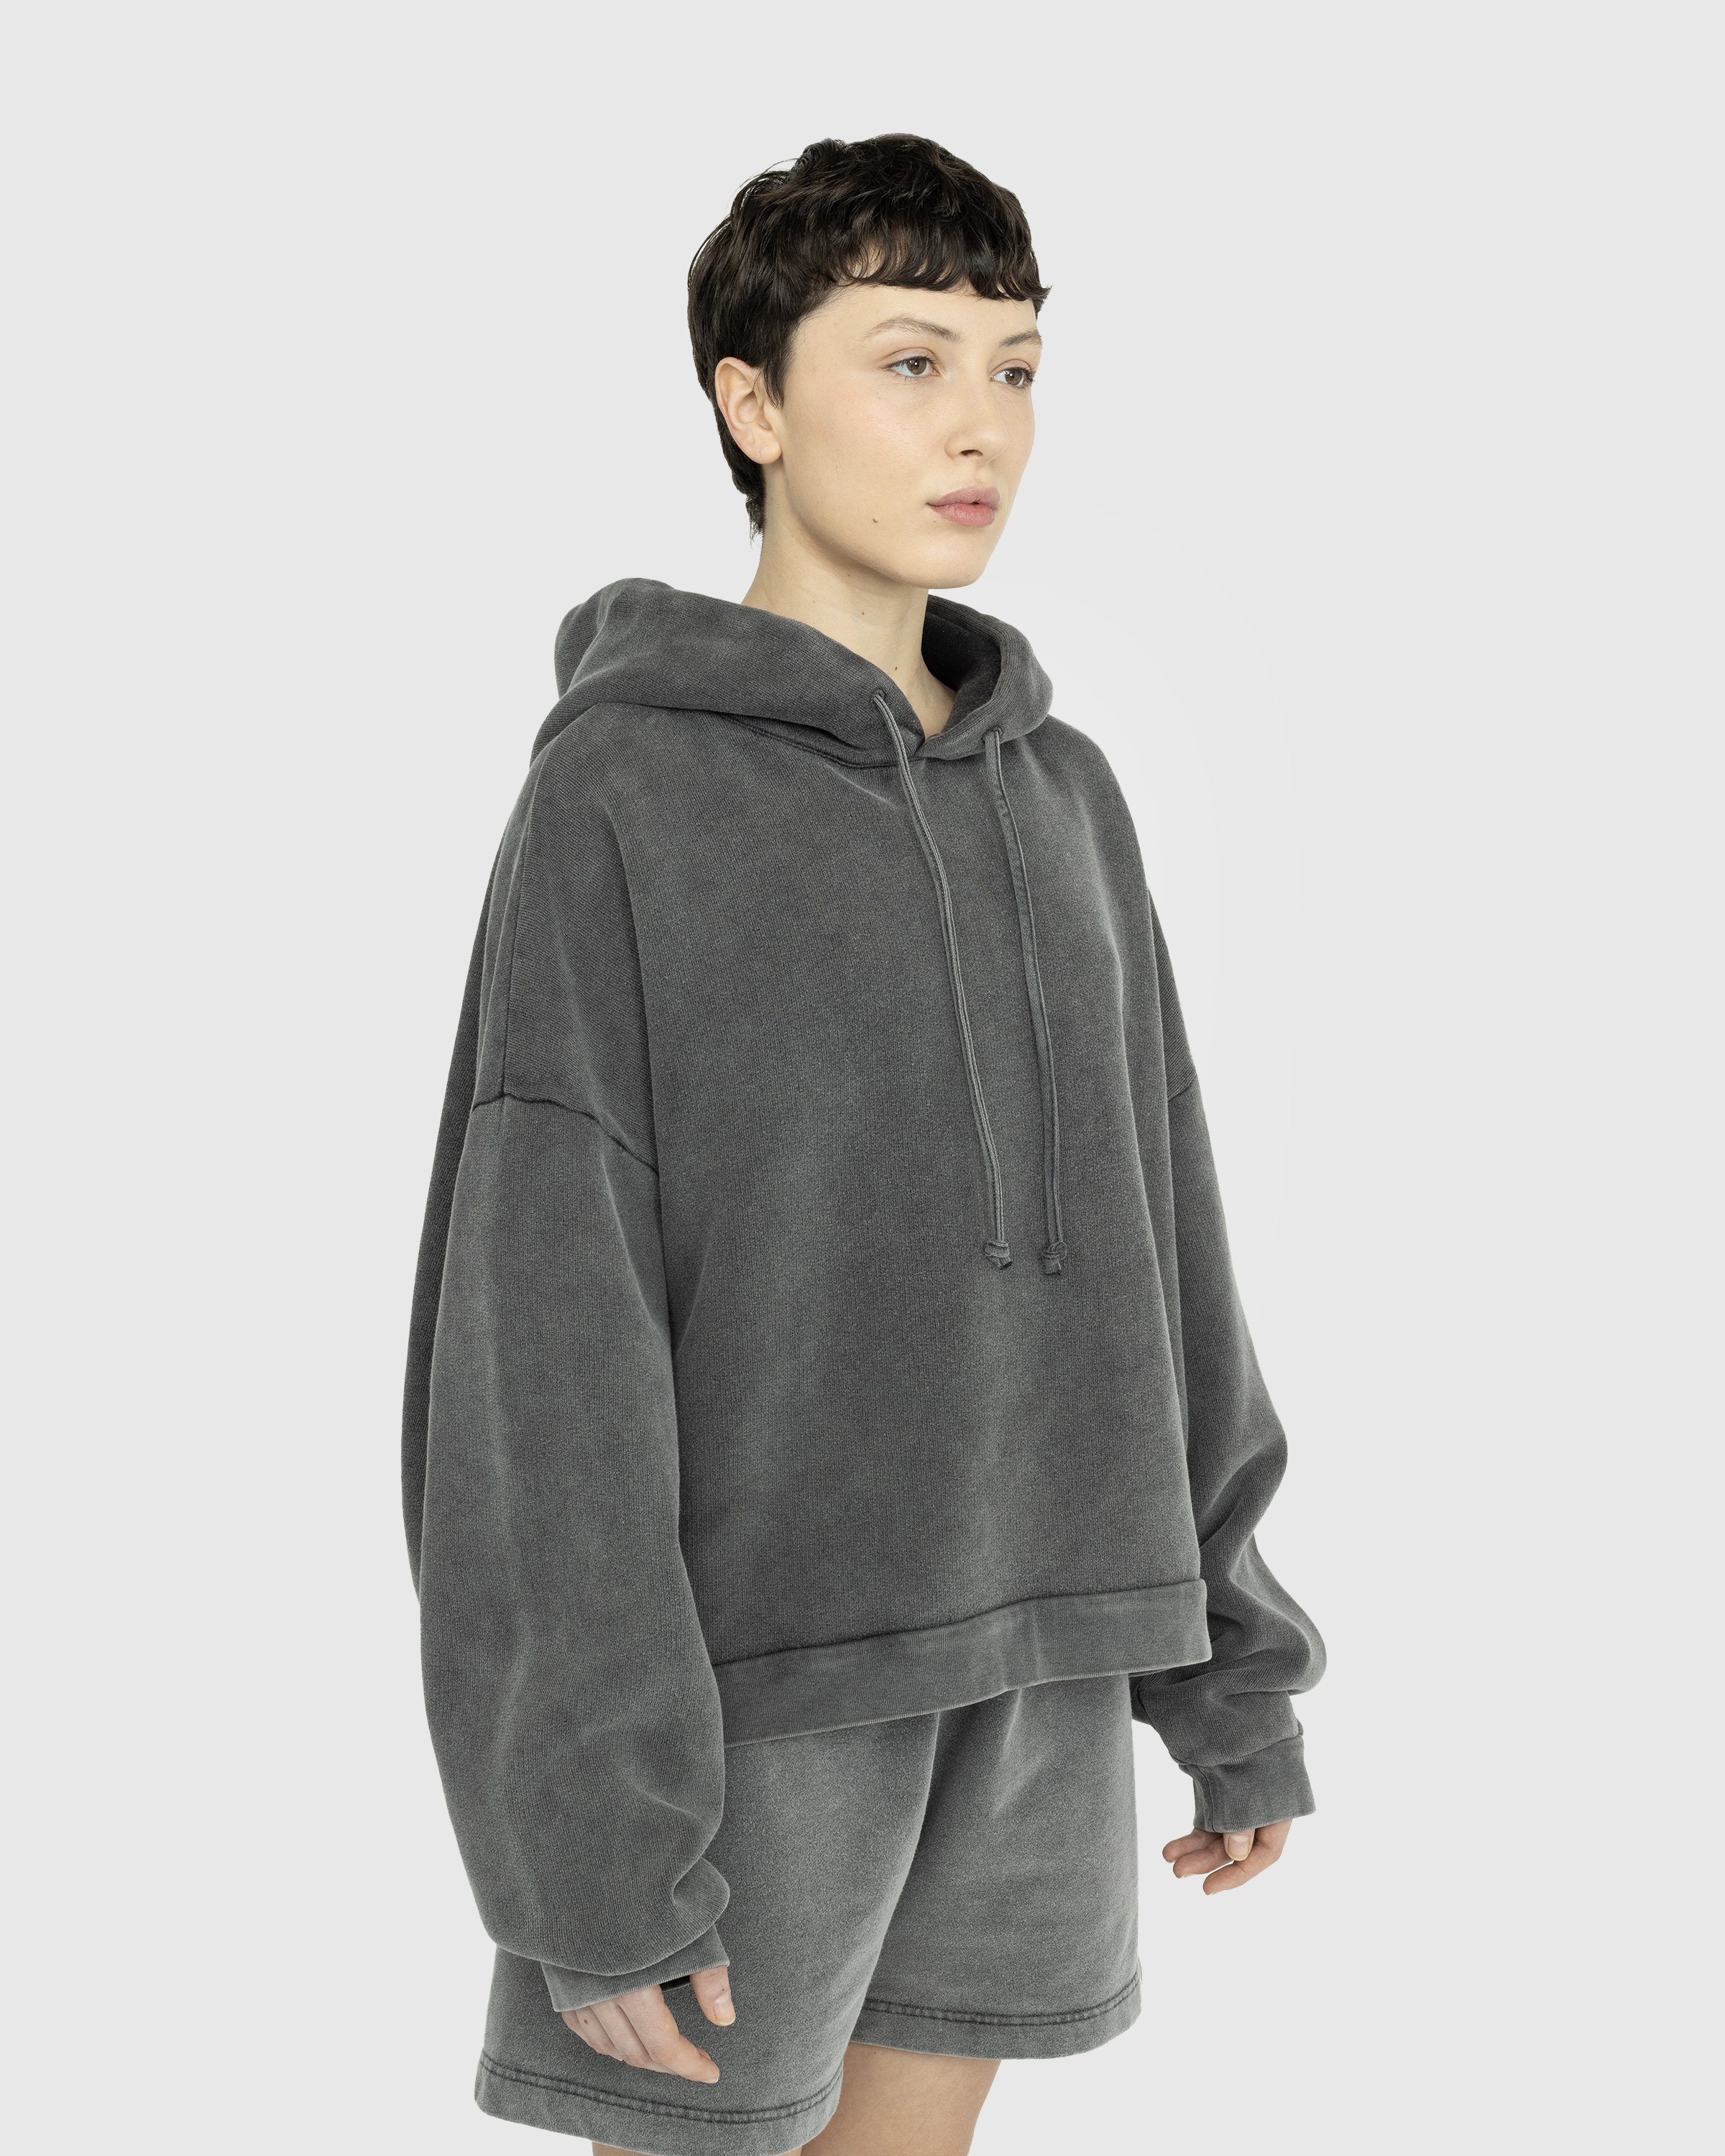 Acne Studios - Hooded Sweatshirt Faded Black - Clothing - Grey - Image 4